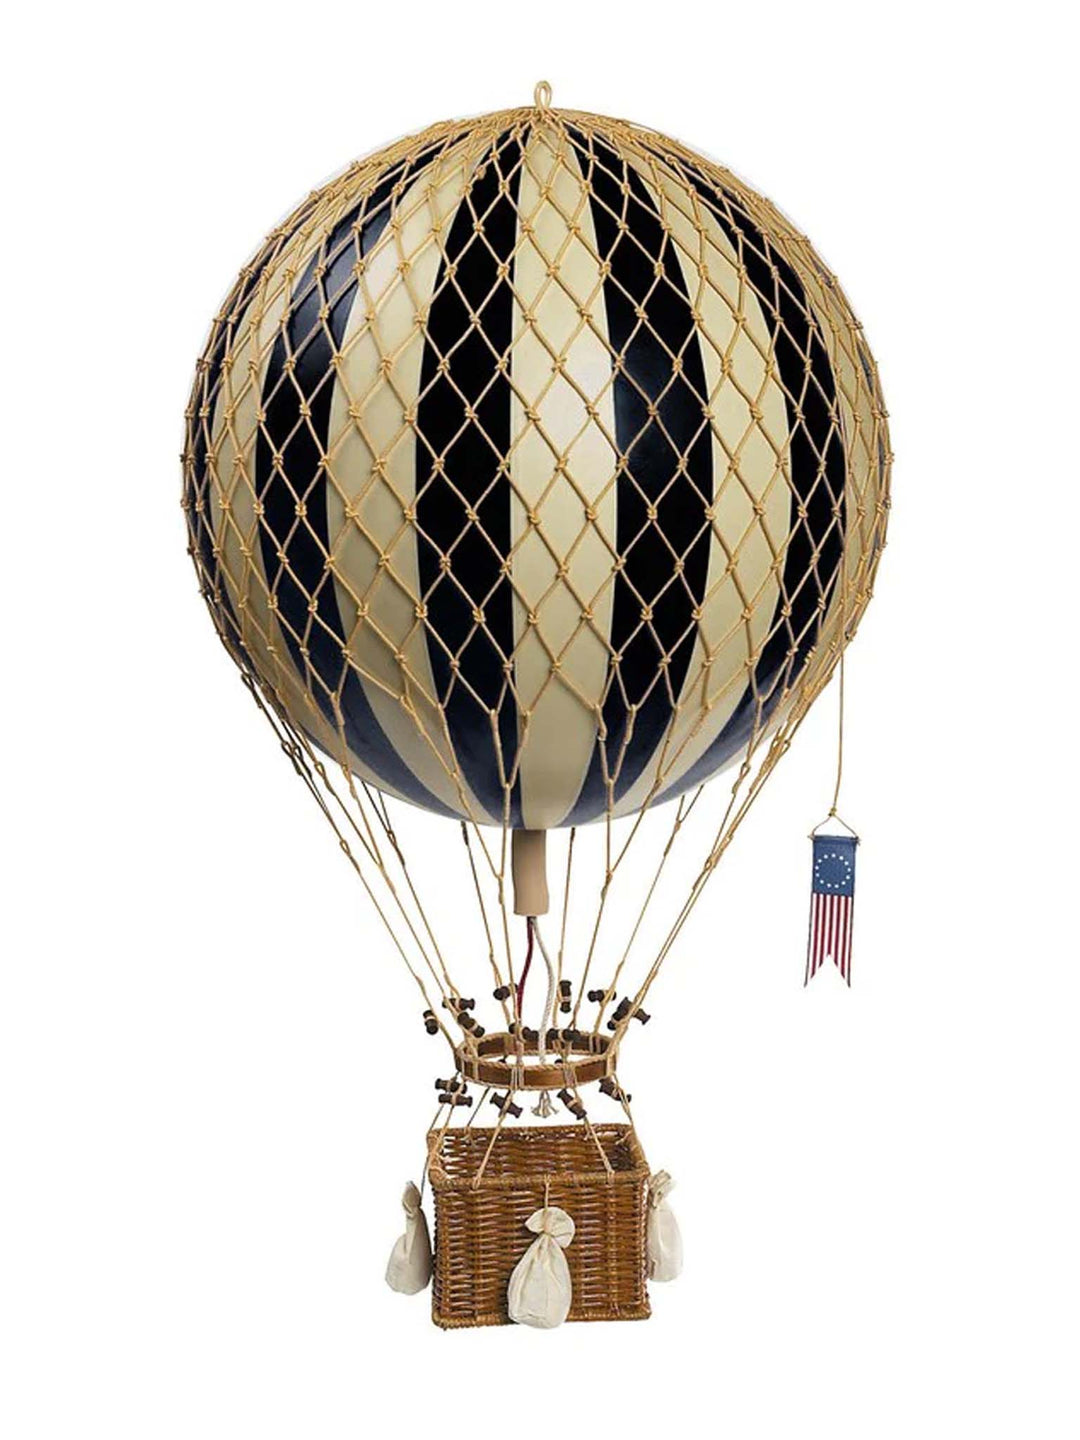 Hot Air Balloon Replica, Multi Colour Vintage Hot Air Balloons, Medium Balloon, 18cm